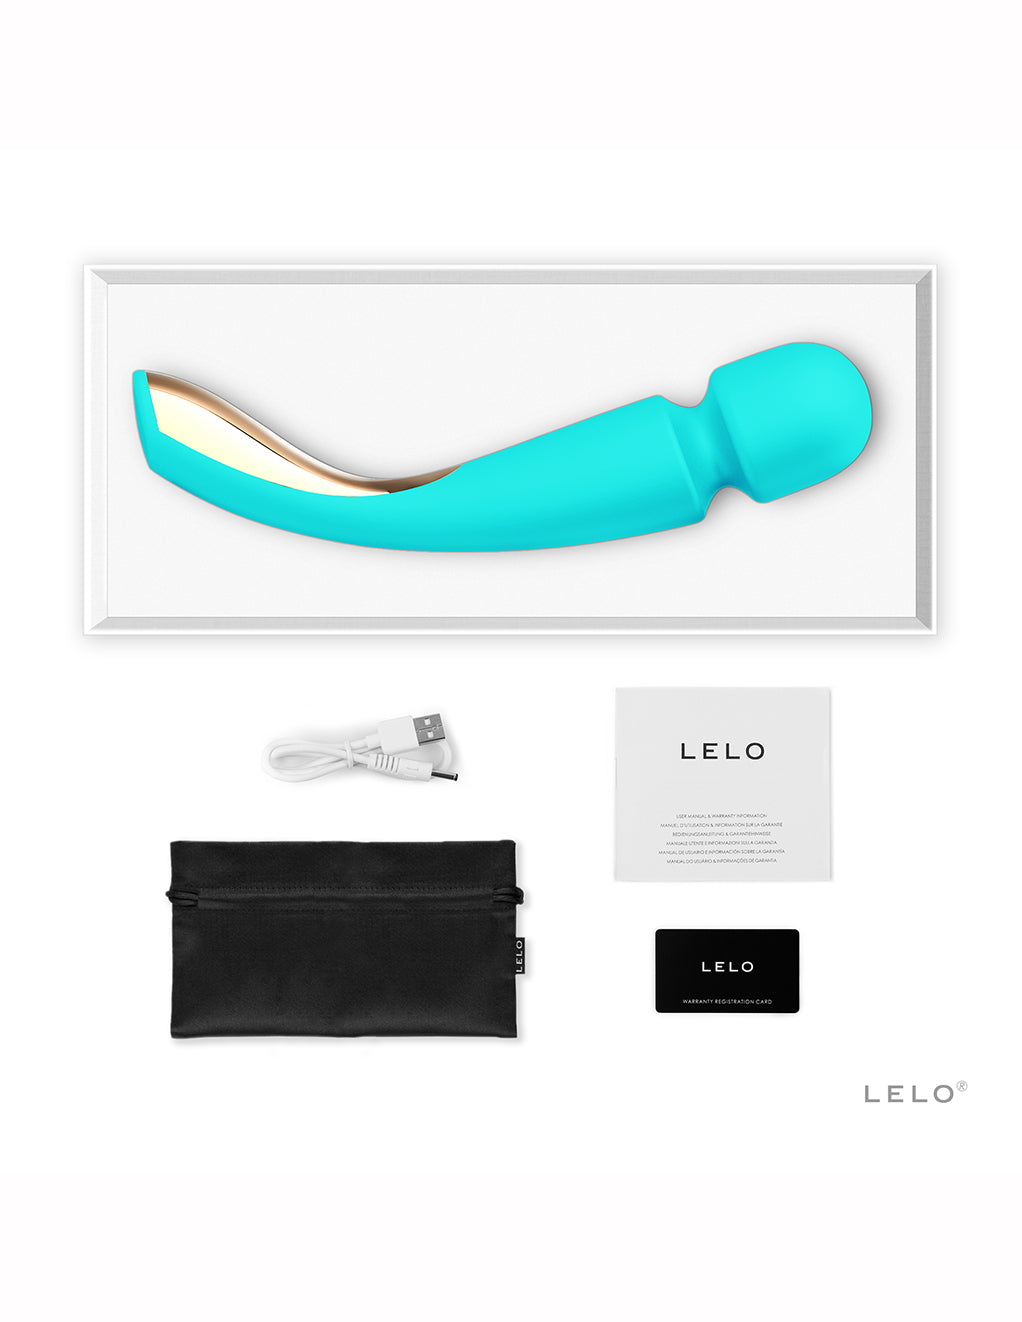 Lelo Smart Wand 2 Large- Aqua- Package Contents